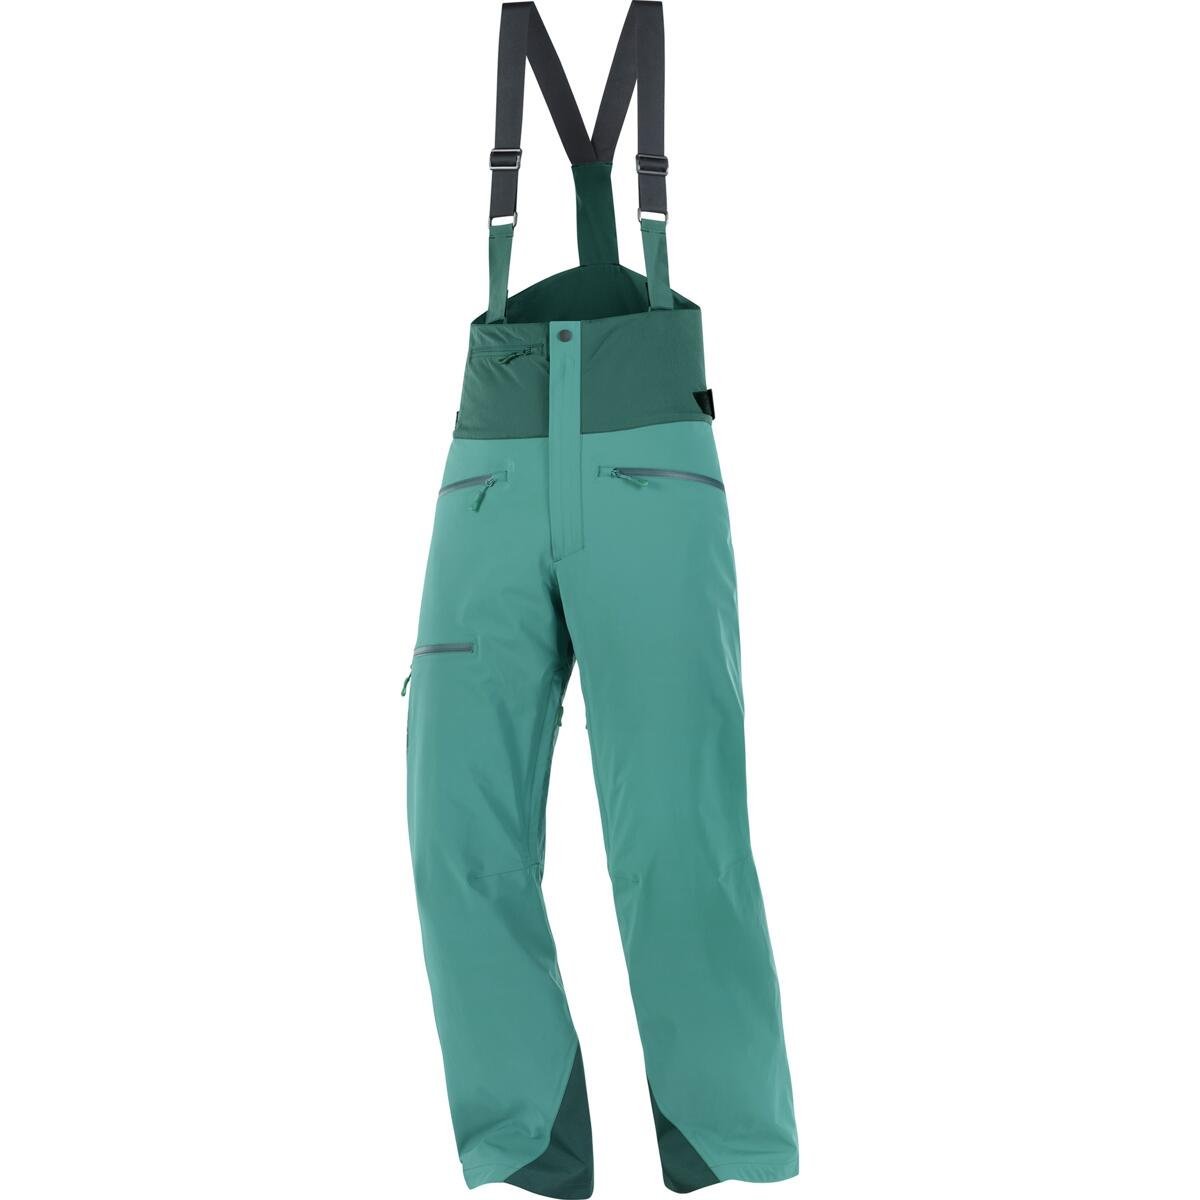 Nohavice Salomon Brilliant Suspenders M - zelená (predĺžená dĺžka)